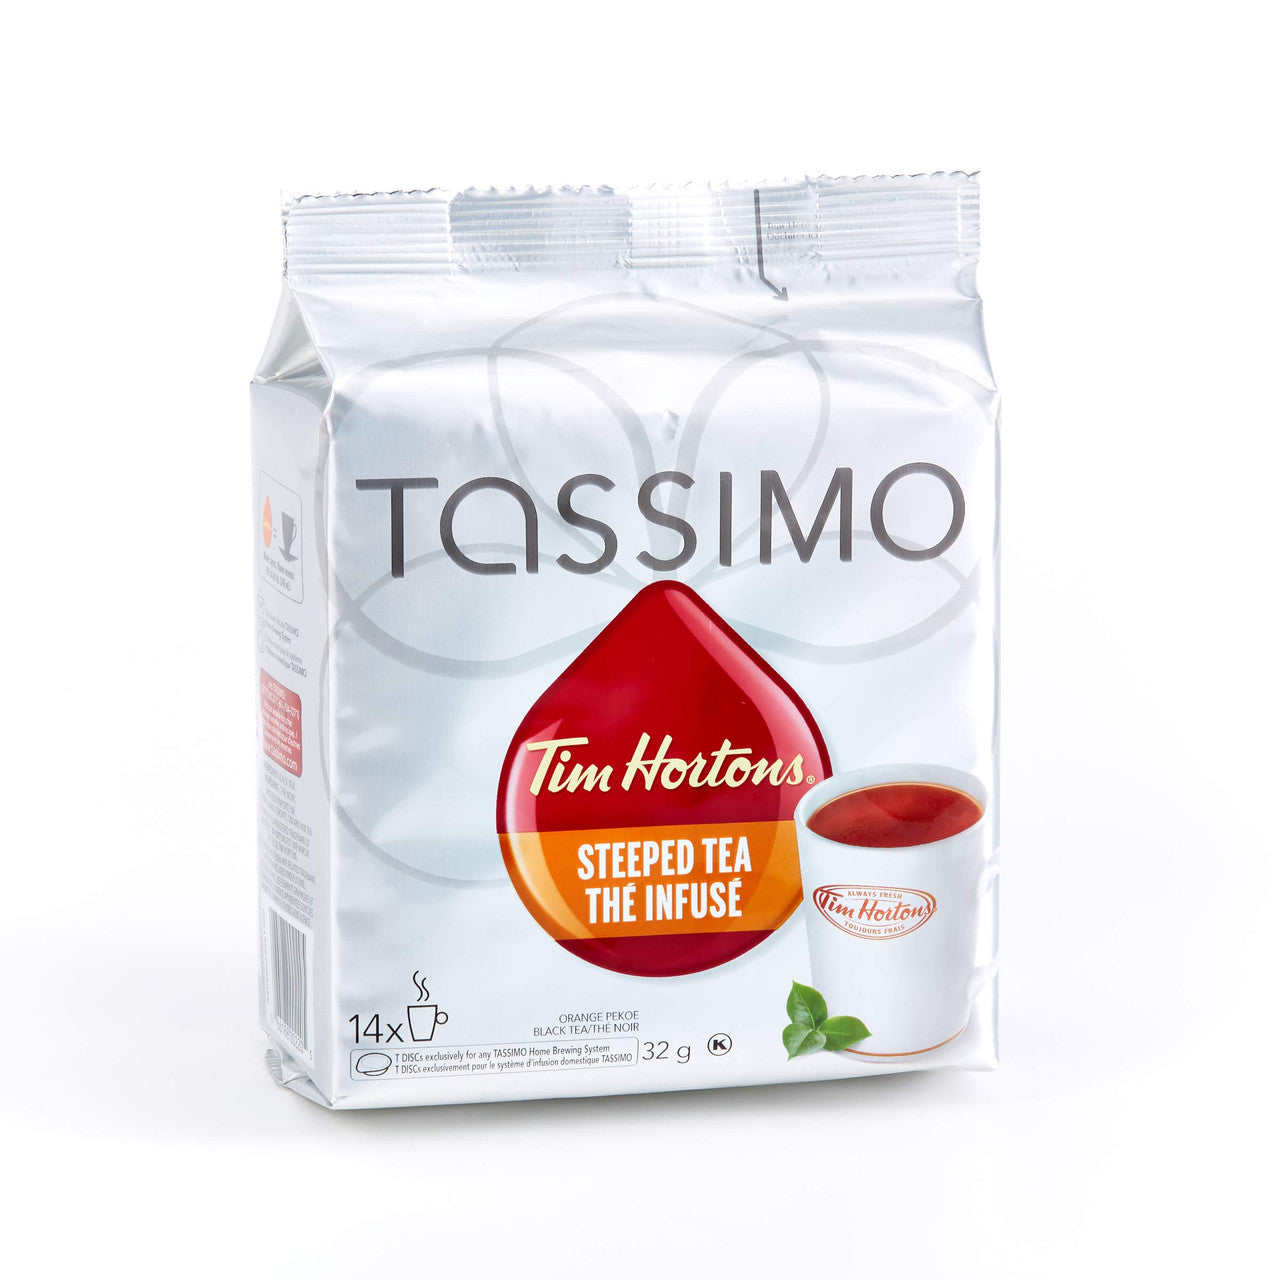 Tim Hortons Steeped Tea Tassimo Orange Pekoe Black Tea, 14 discs {Imported from Canada}